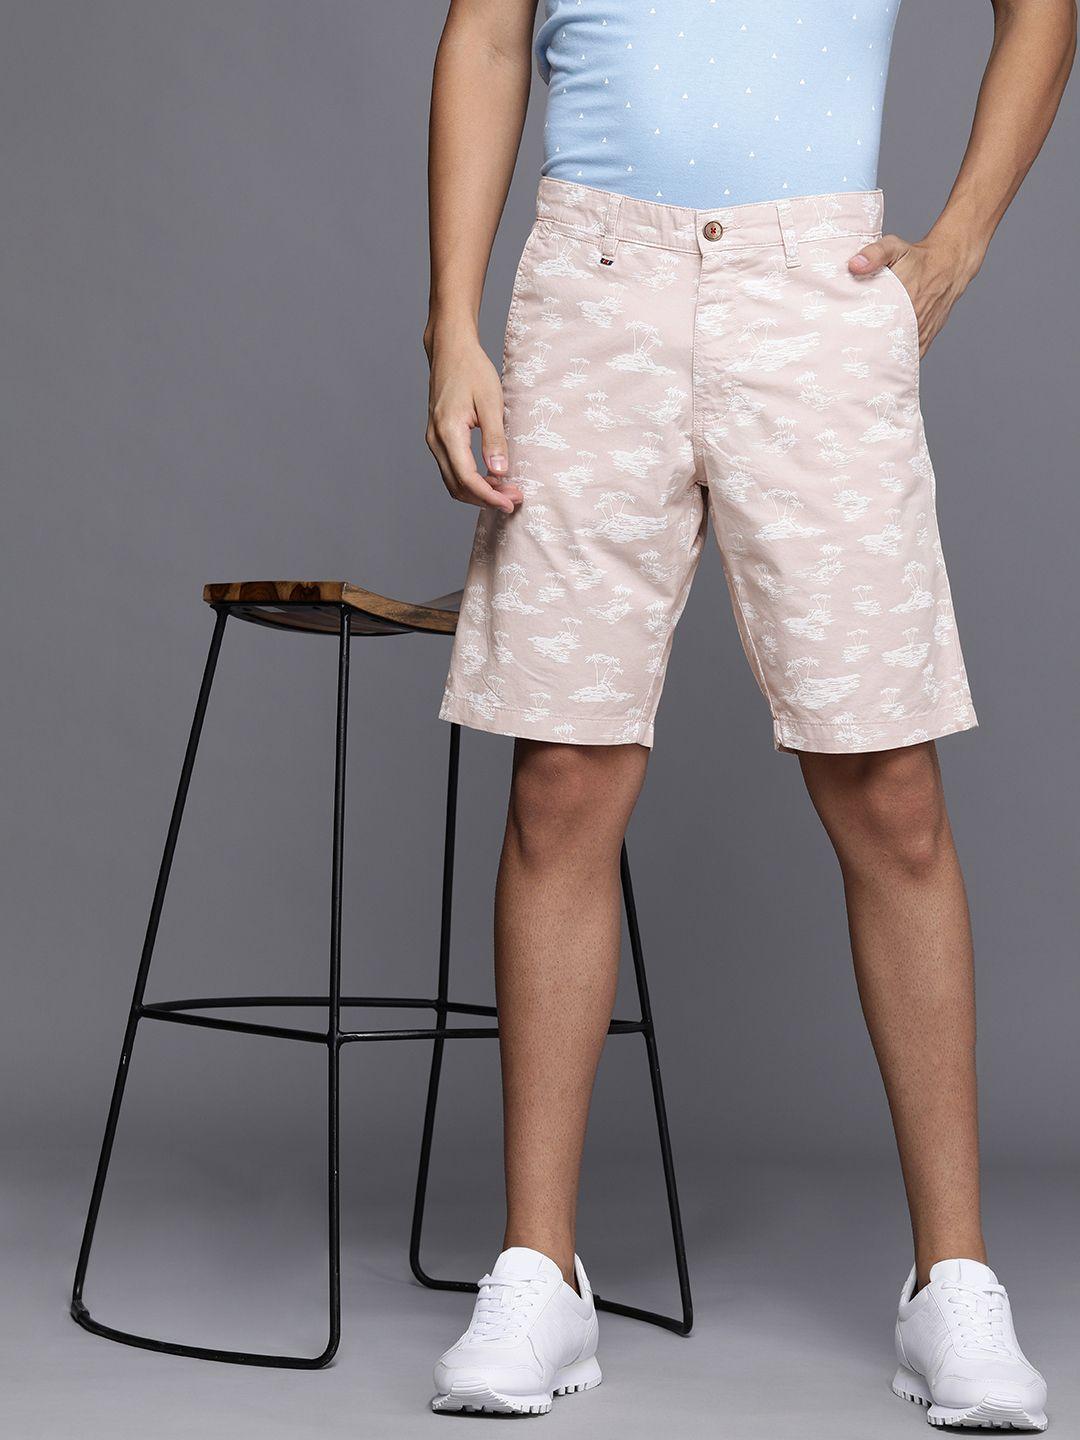 louis-philippe-sport-men-pink-conversational-print--regular-fit-chinos-shorts